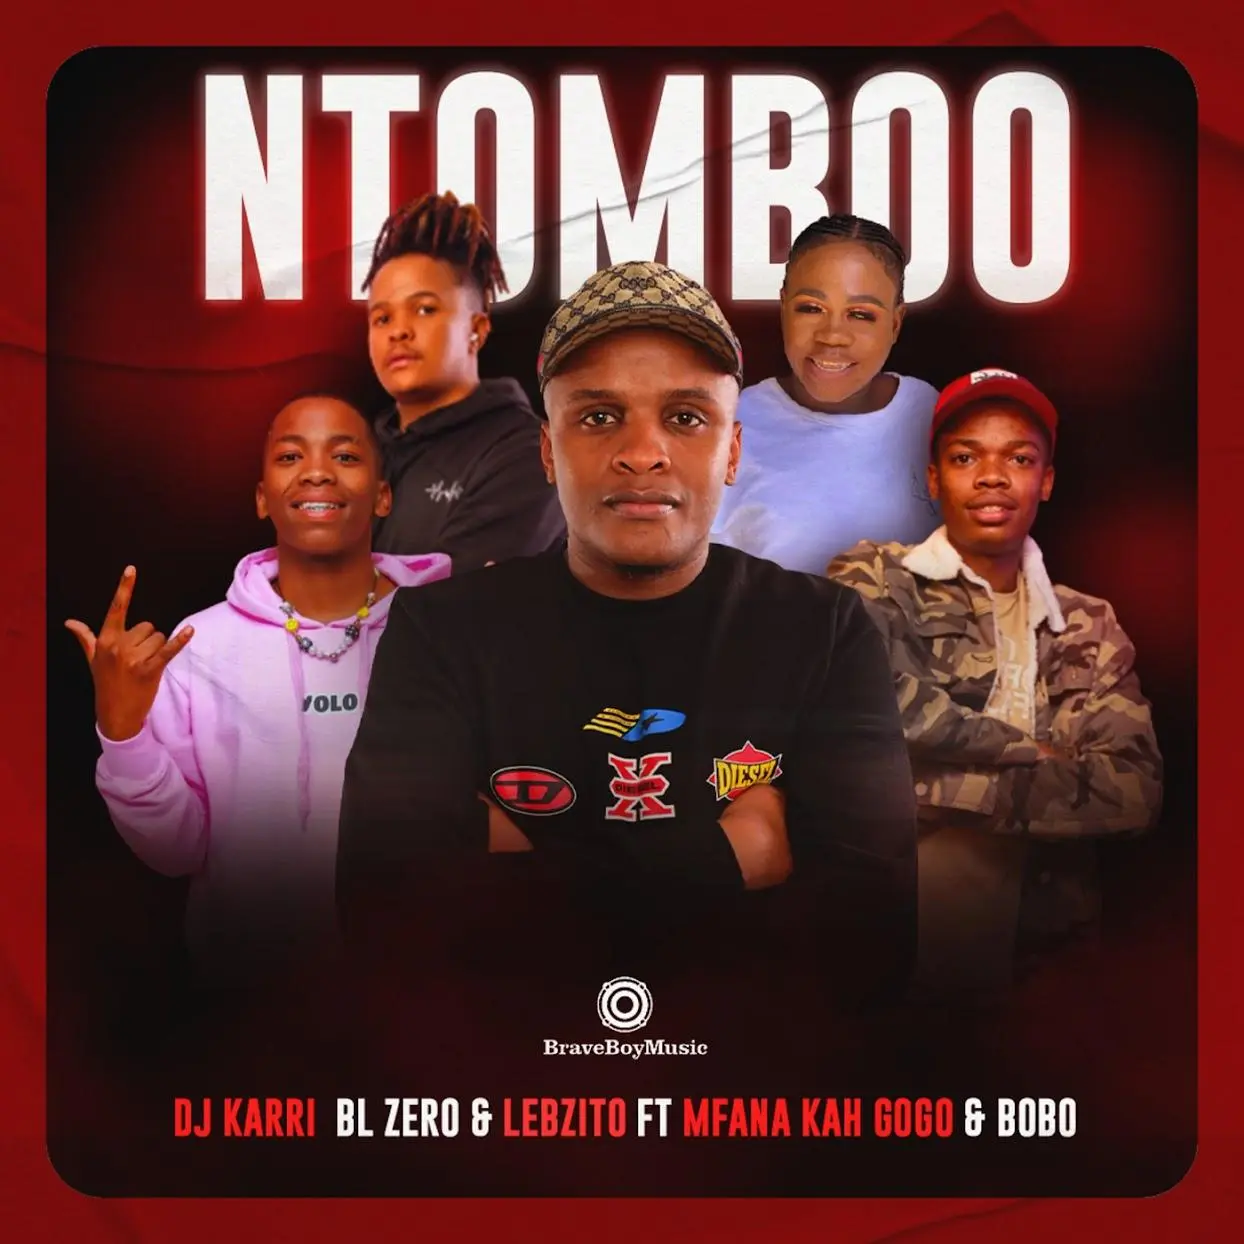 DJ Karri, BL Zero & Lebzito - Ntomboo (feat. Mfana Kah Gogo & Bobo Mbele)